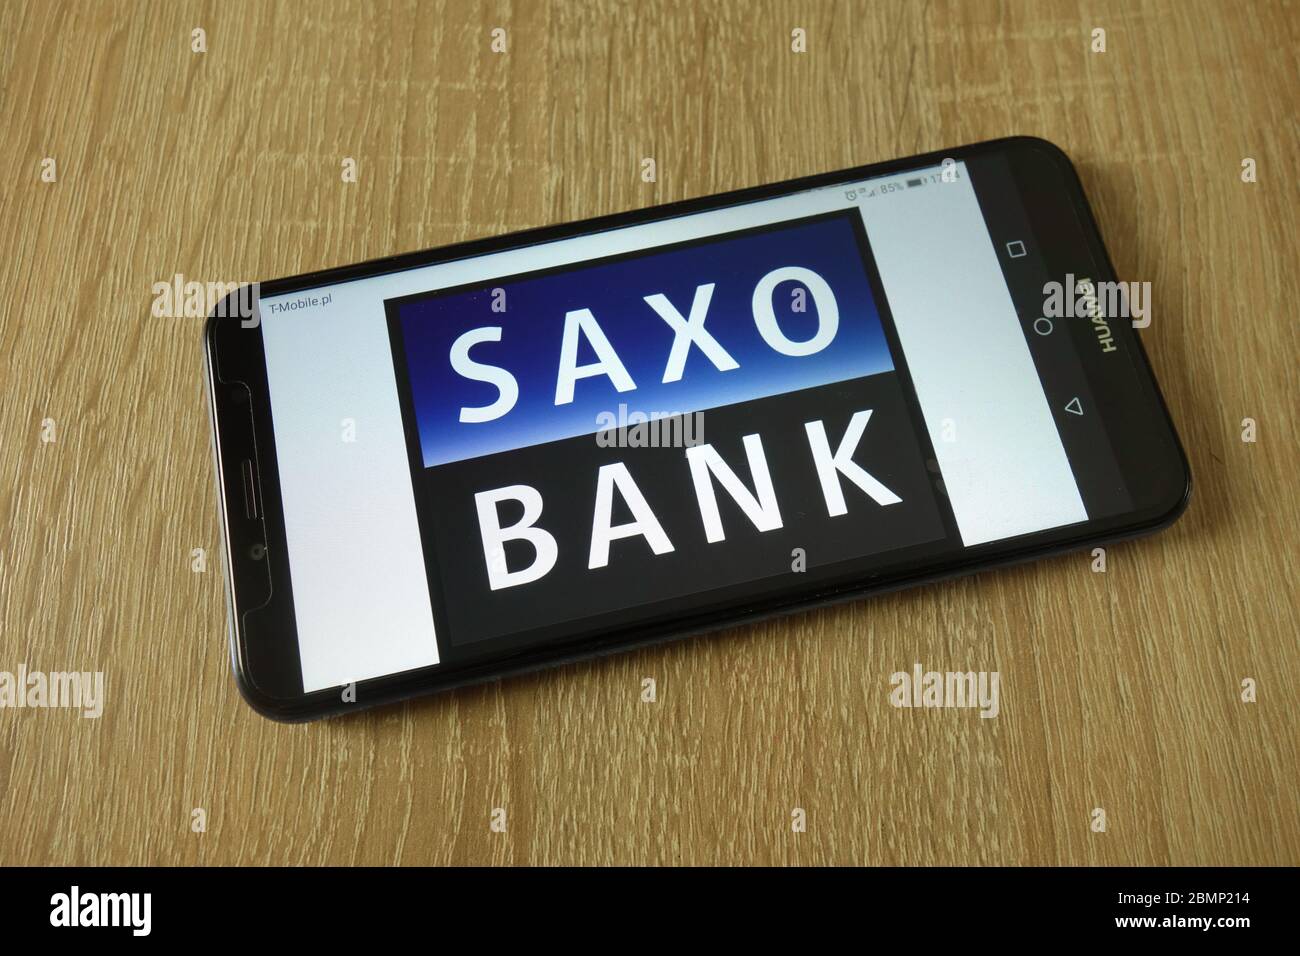 Saxo Bank logo displayed on smartphone Stock Photo - Alamy